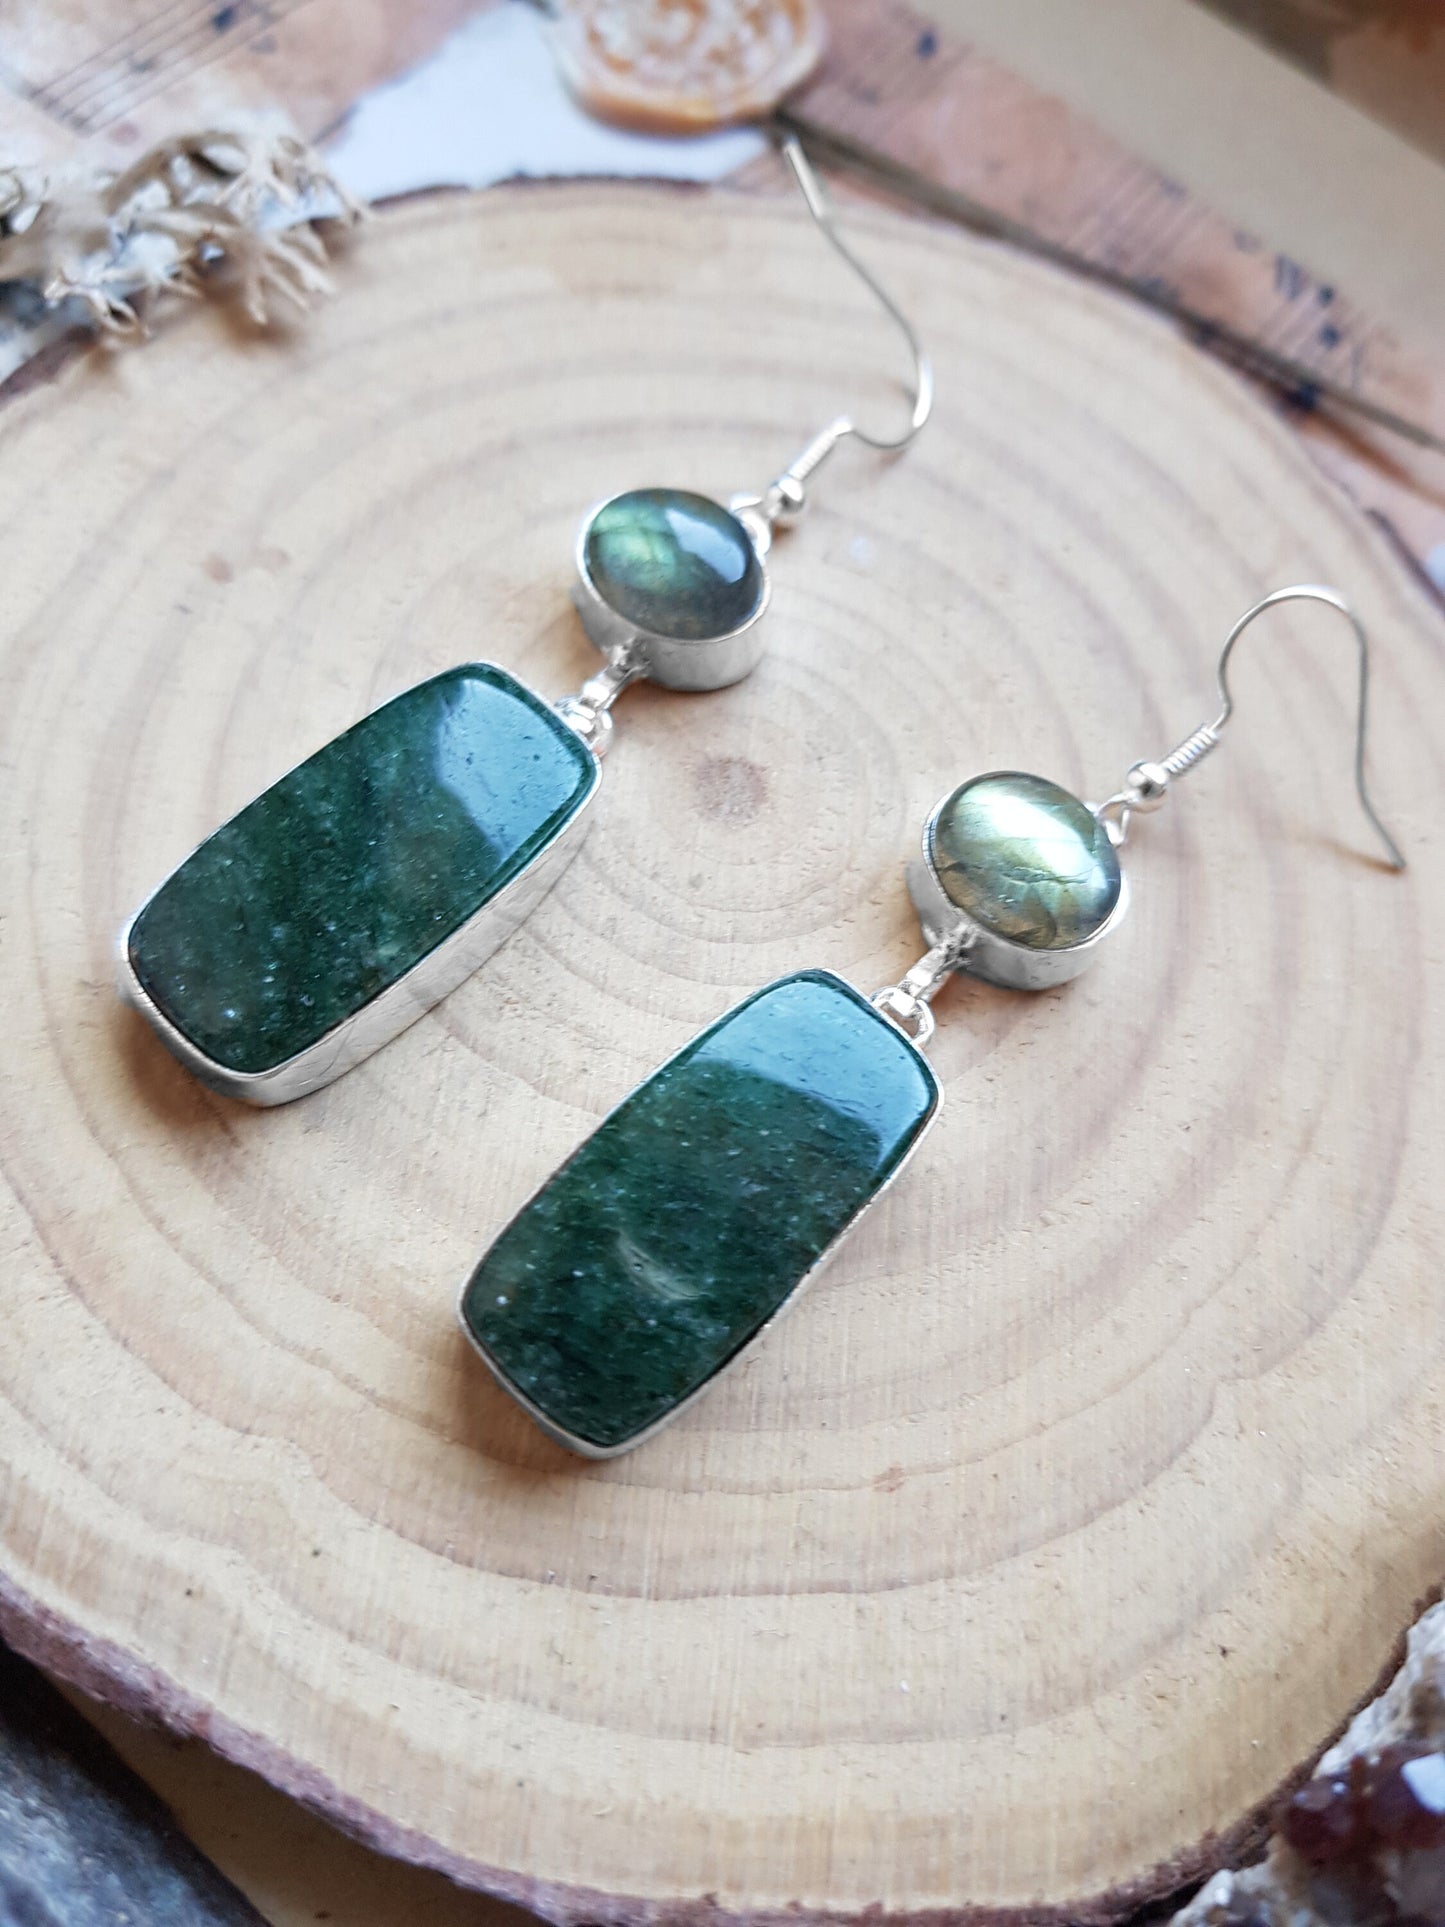 Moss Agate And Labradorite Earrings In Sterling Silver Dangle Earrings Crystal Jewelry